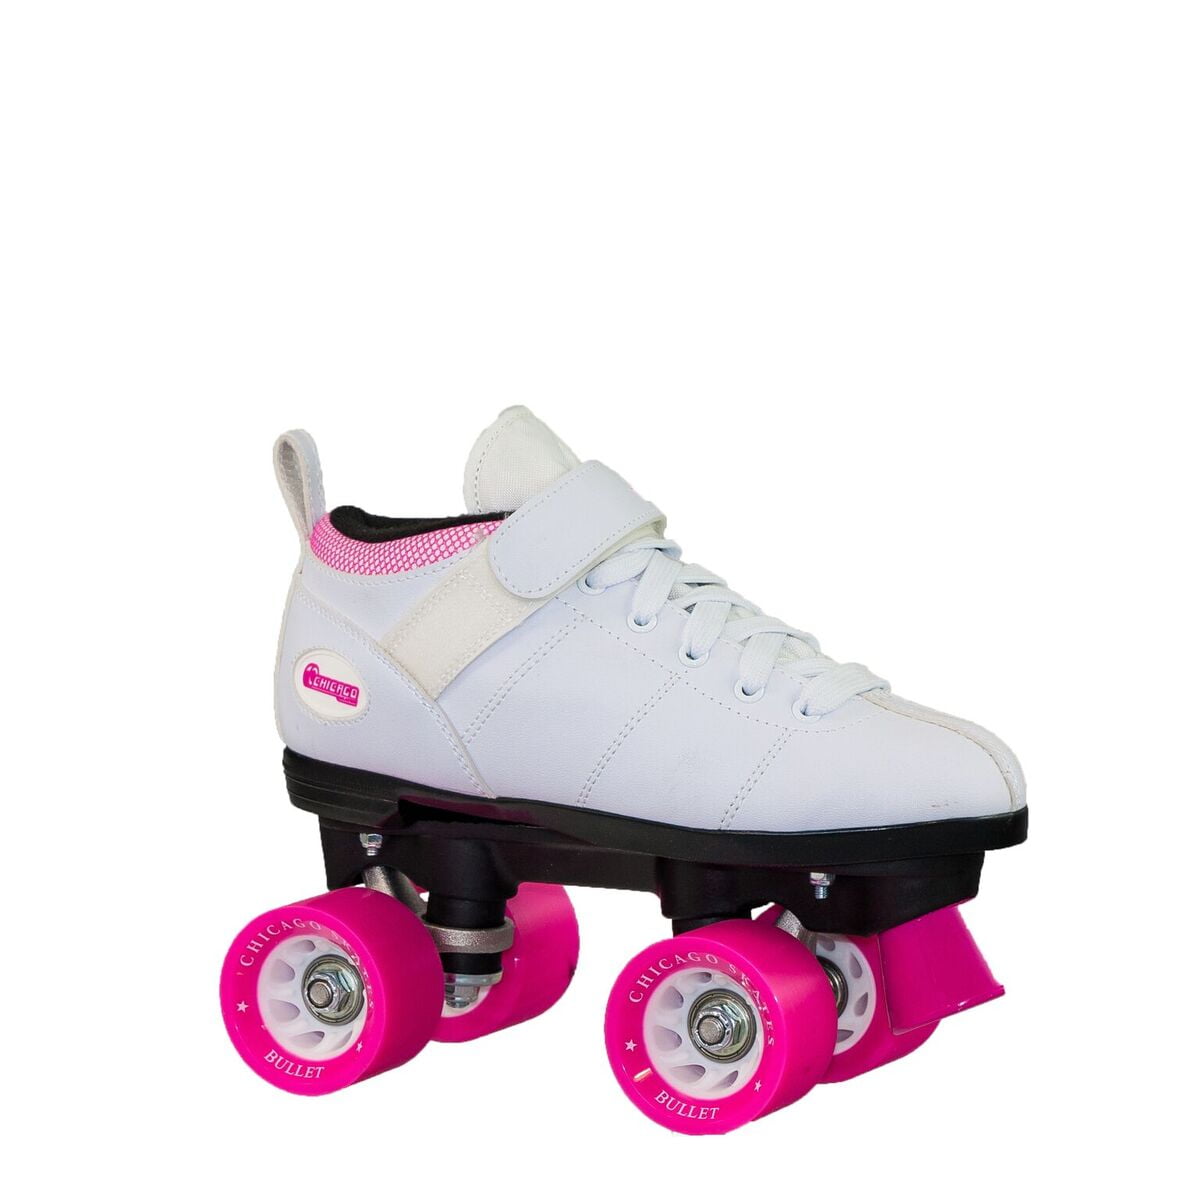 US 8 for sale online White Chicago Ladies Classic Quad Roller Skates 